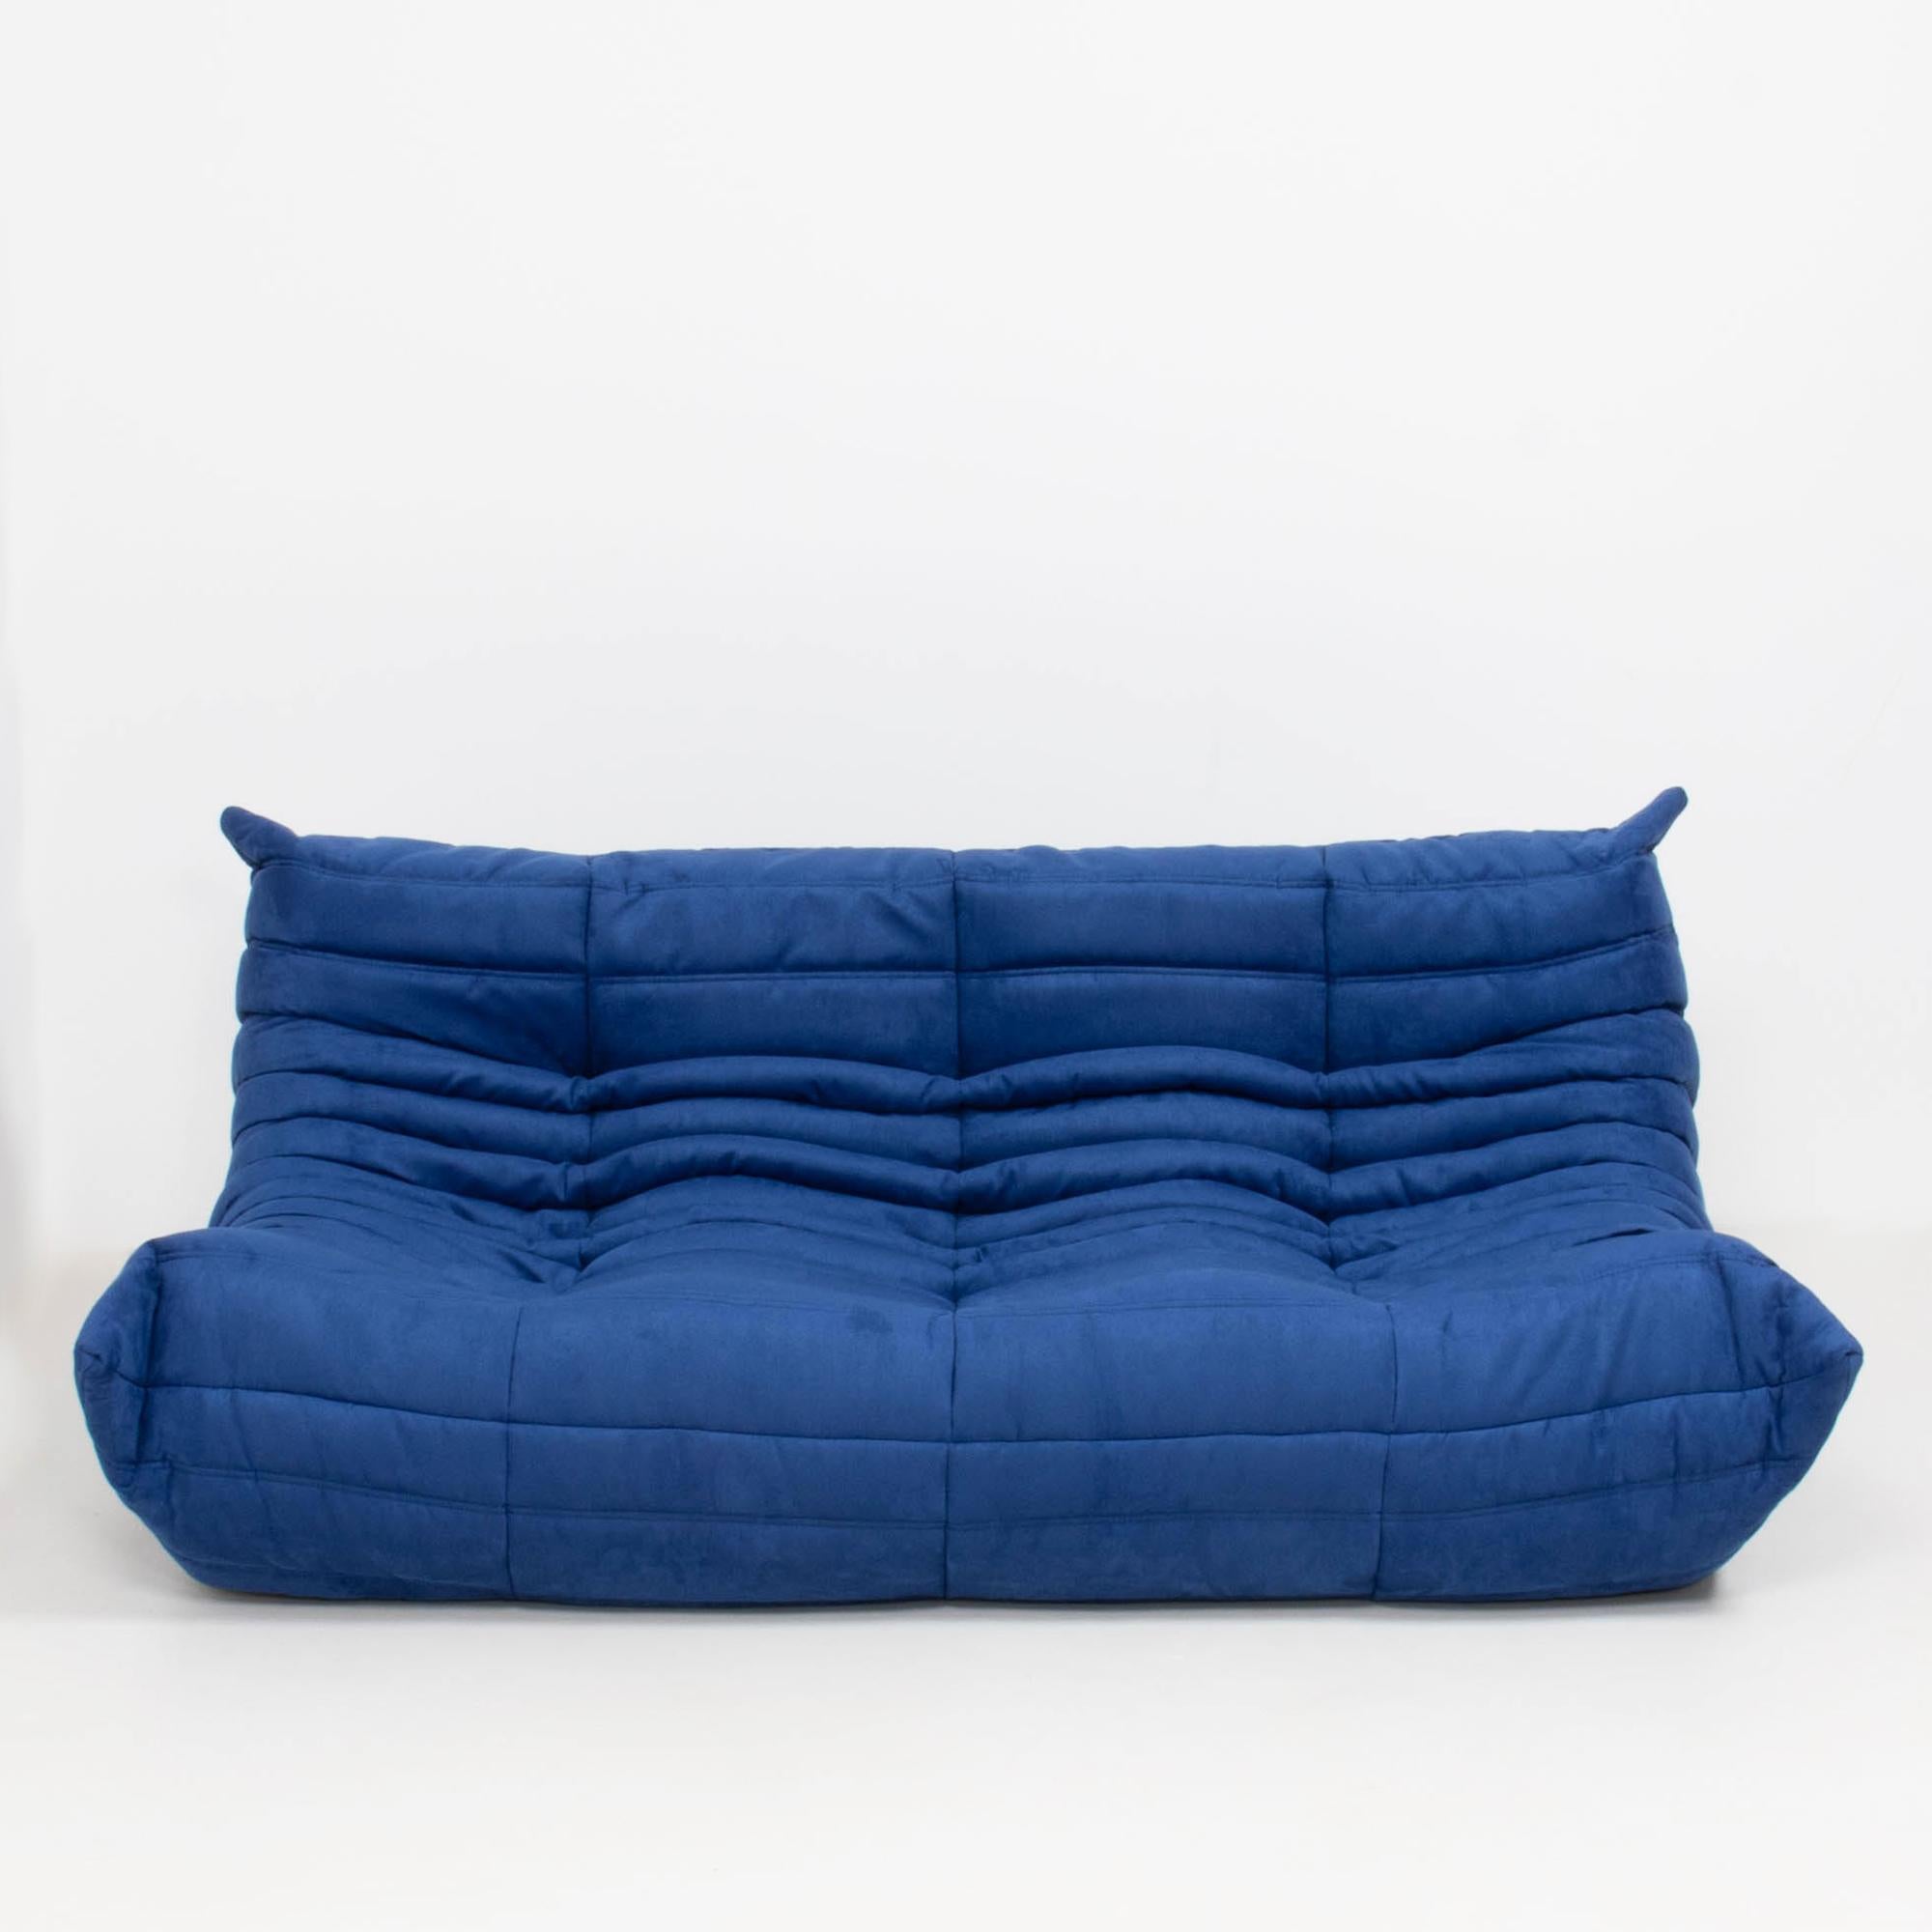 French Michel Ducaroy for Ligne Roset Togo Blue Modular Sofa, Set of 3